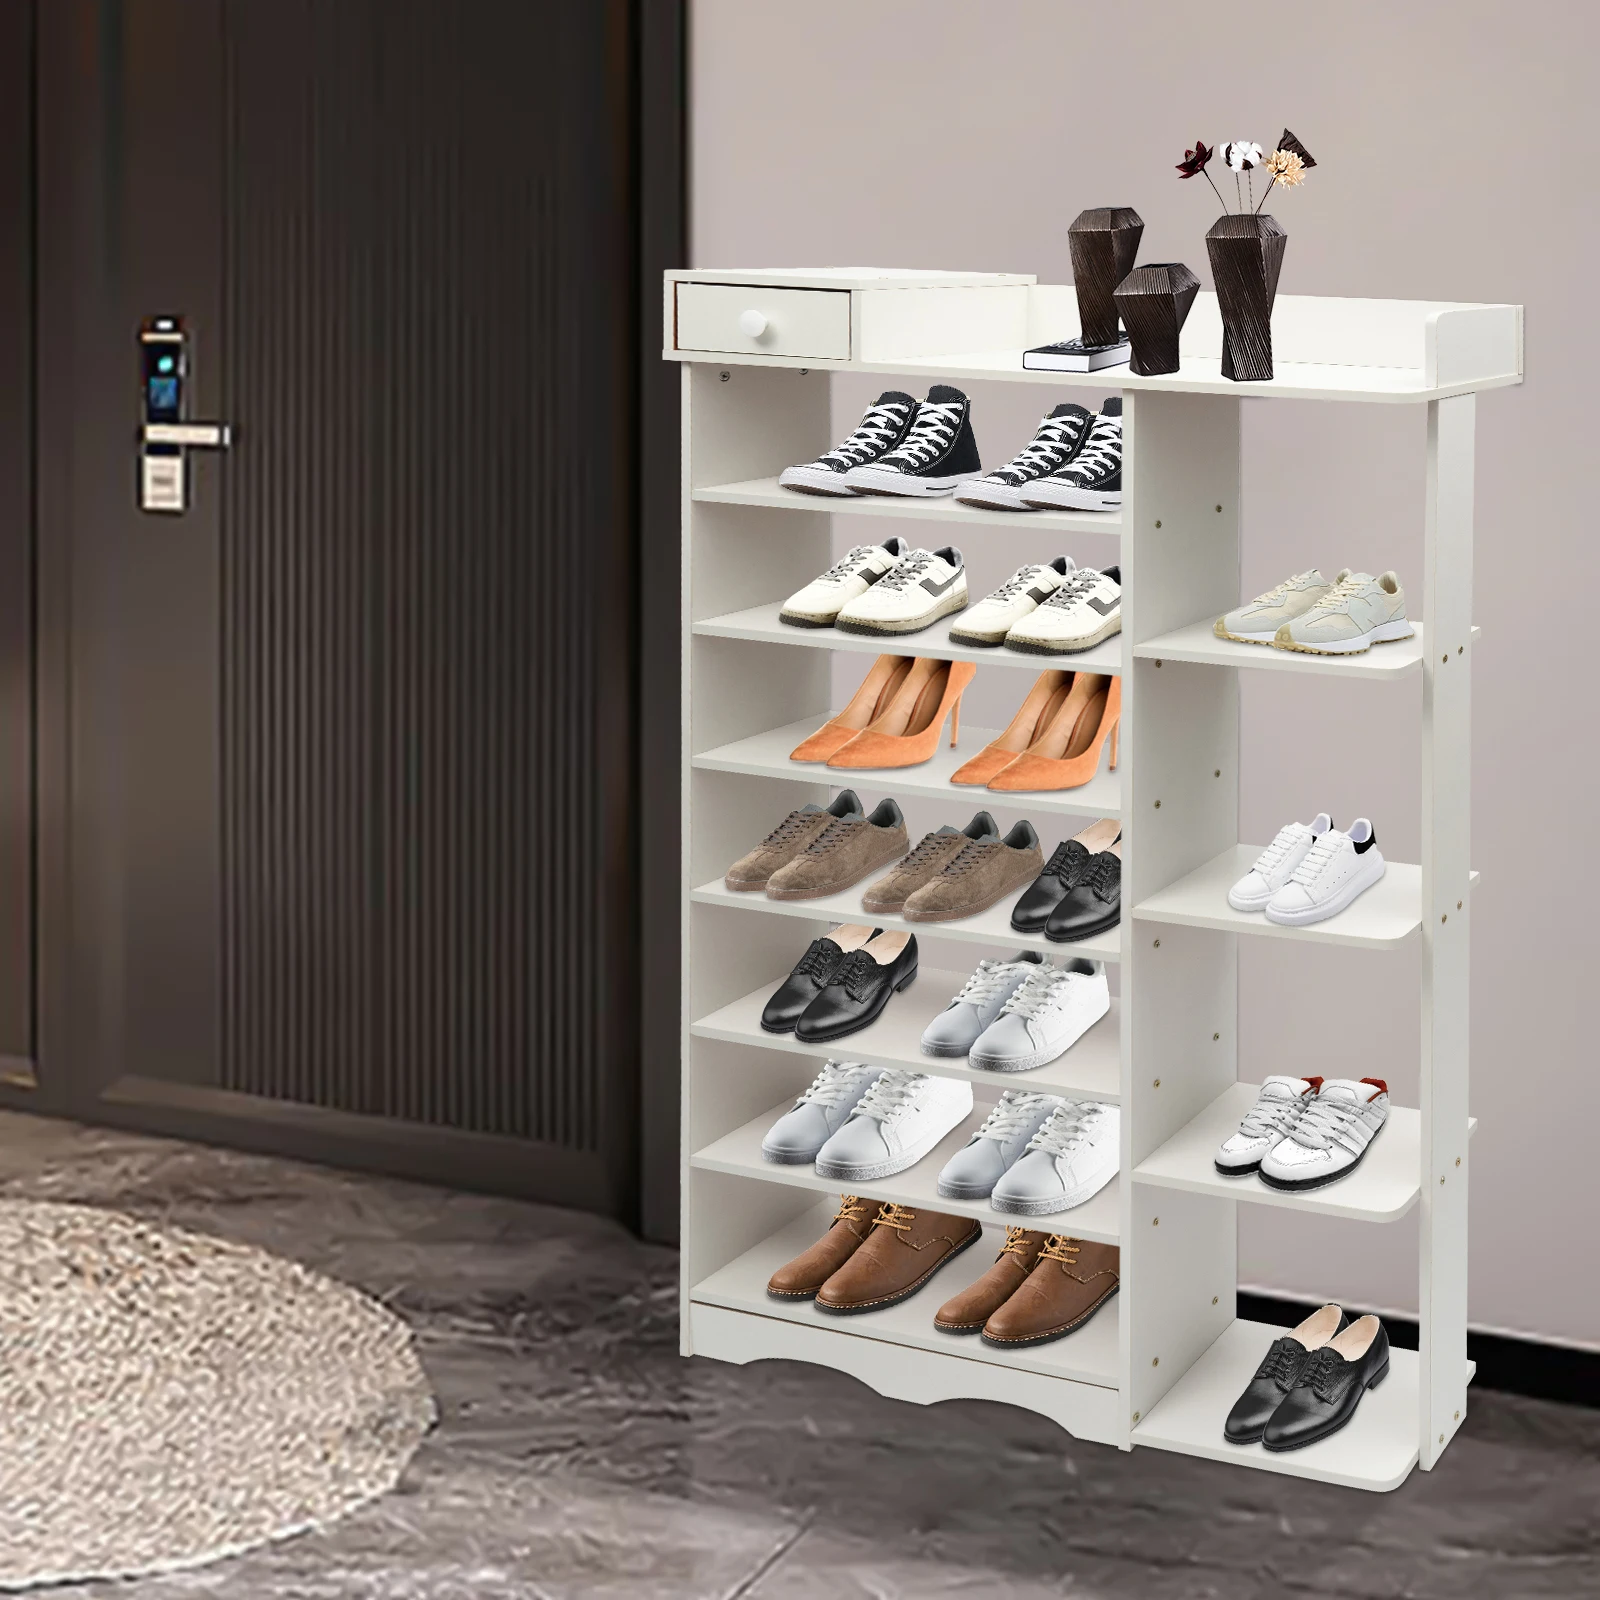 https://ae01.alicdn.com/kf/S7e229280837145e2be97c9f56be50395q/8-Tier-Shoe-Rack-Shoes-Standing-Shoe-Cabinet-Storage-Shelf-Entryway-Hallway-Organizer-White-80-24.jpg